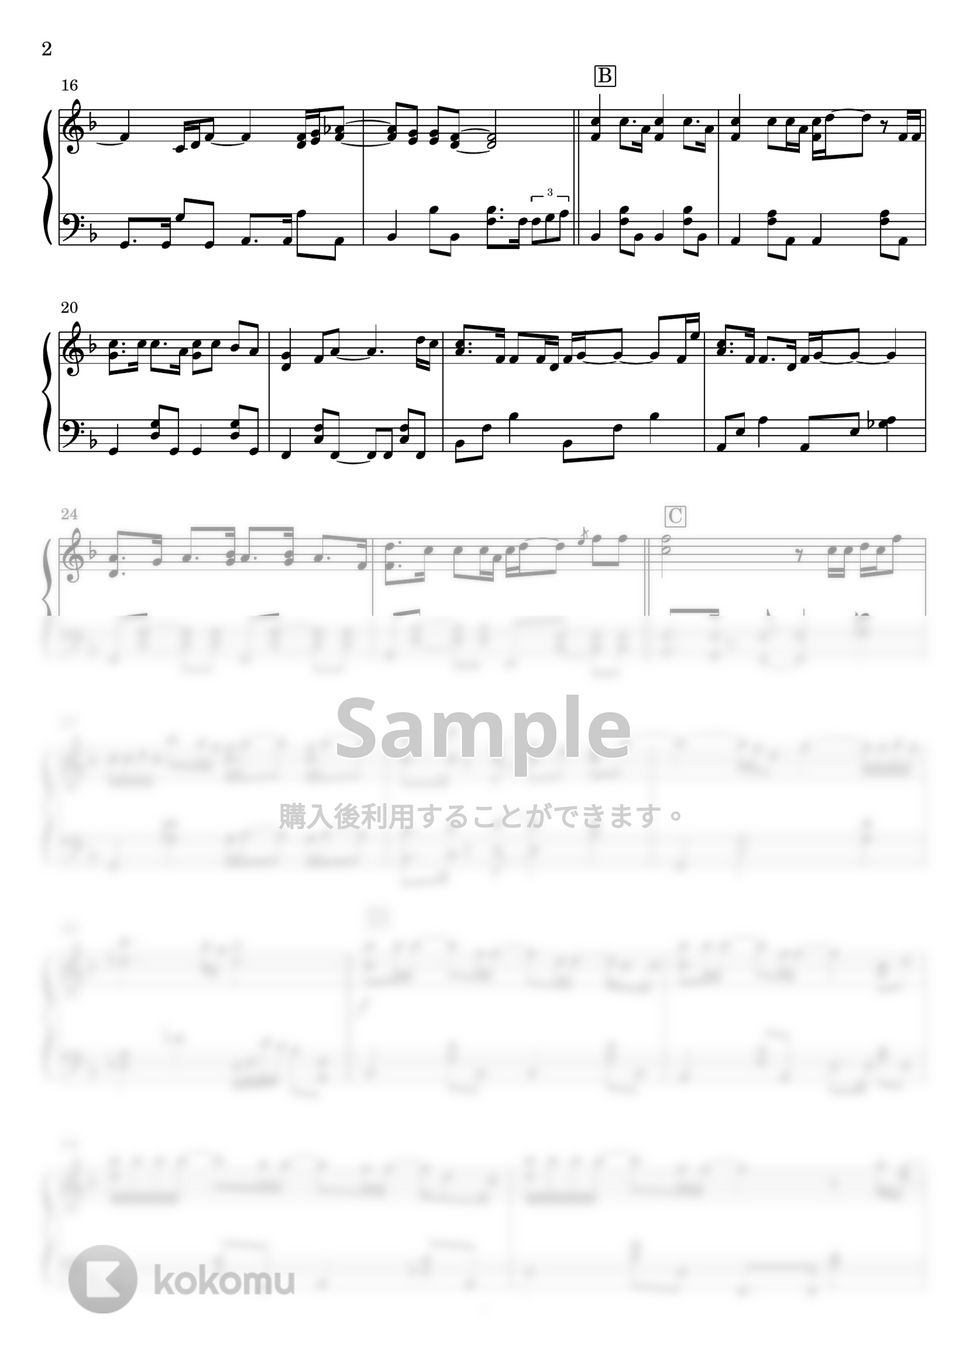 Official髭男dism - TATTOO (フルver.) (ピアノソロ) by Miz